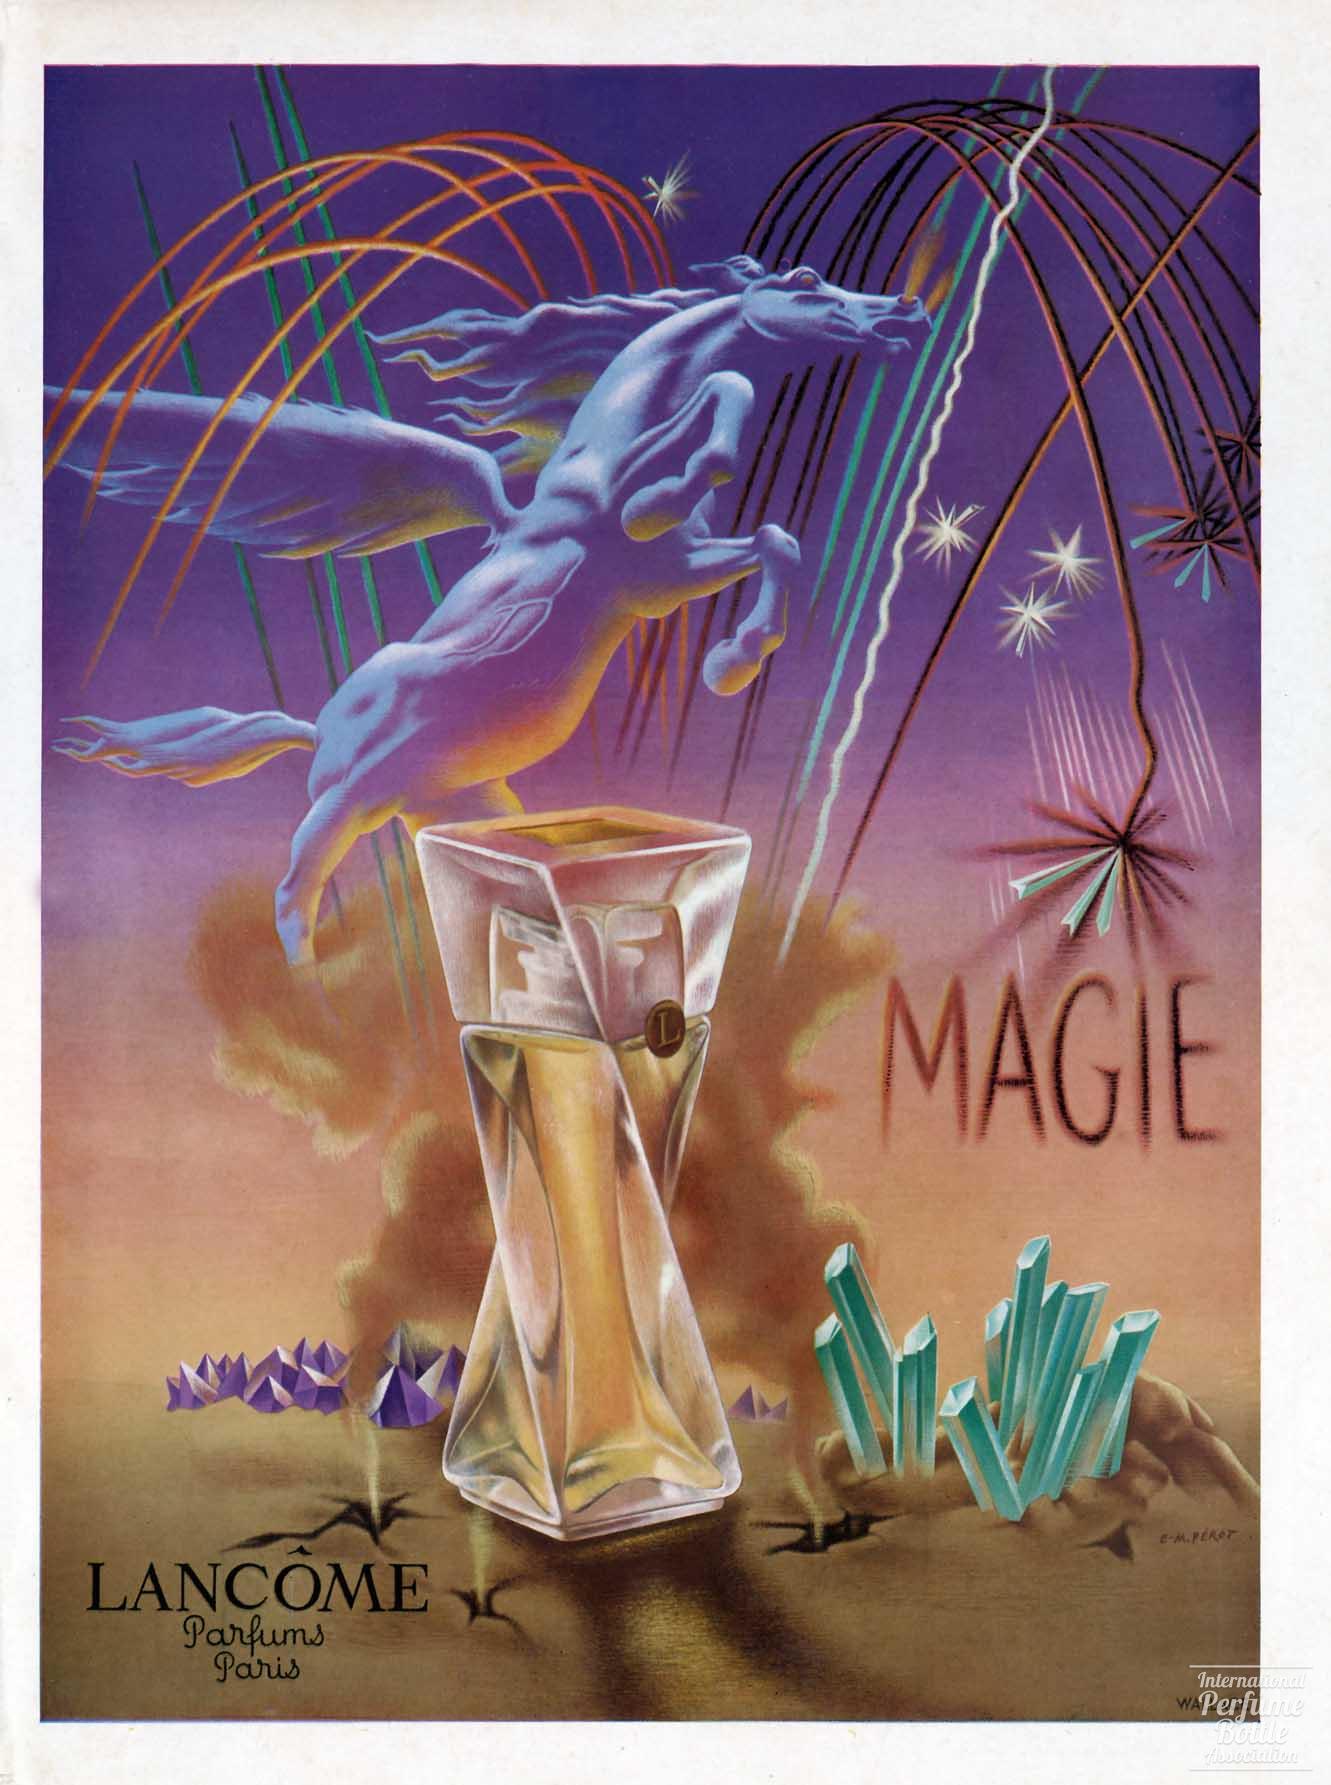 “Magie” by Lancôme Advertisement - 1951